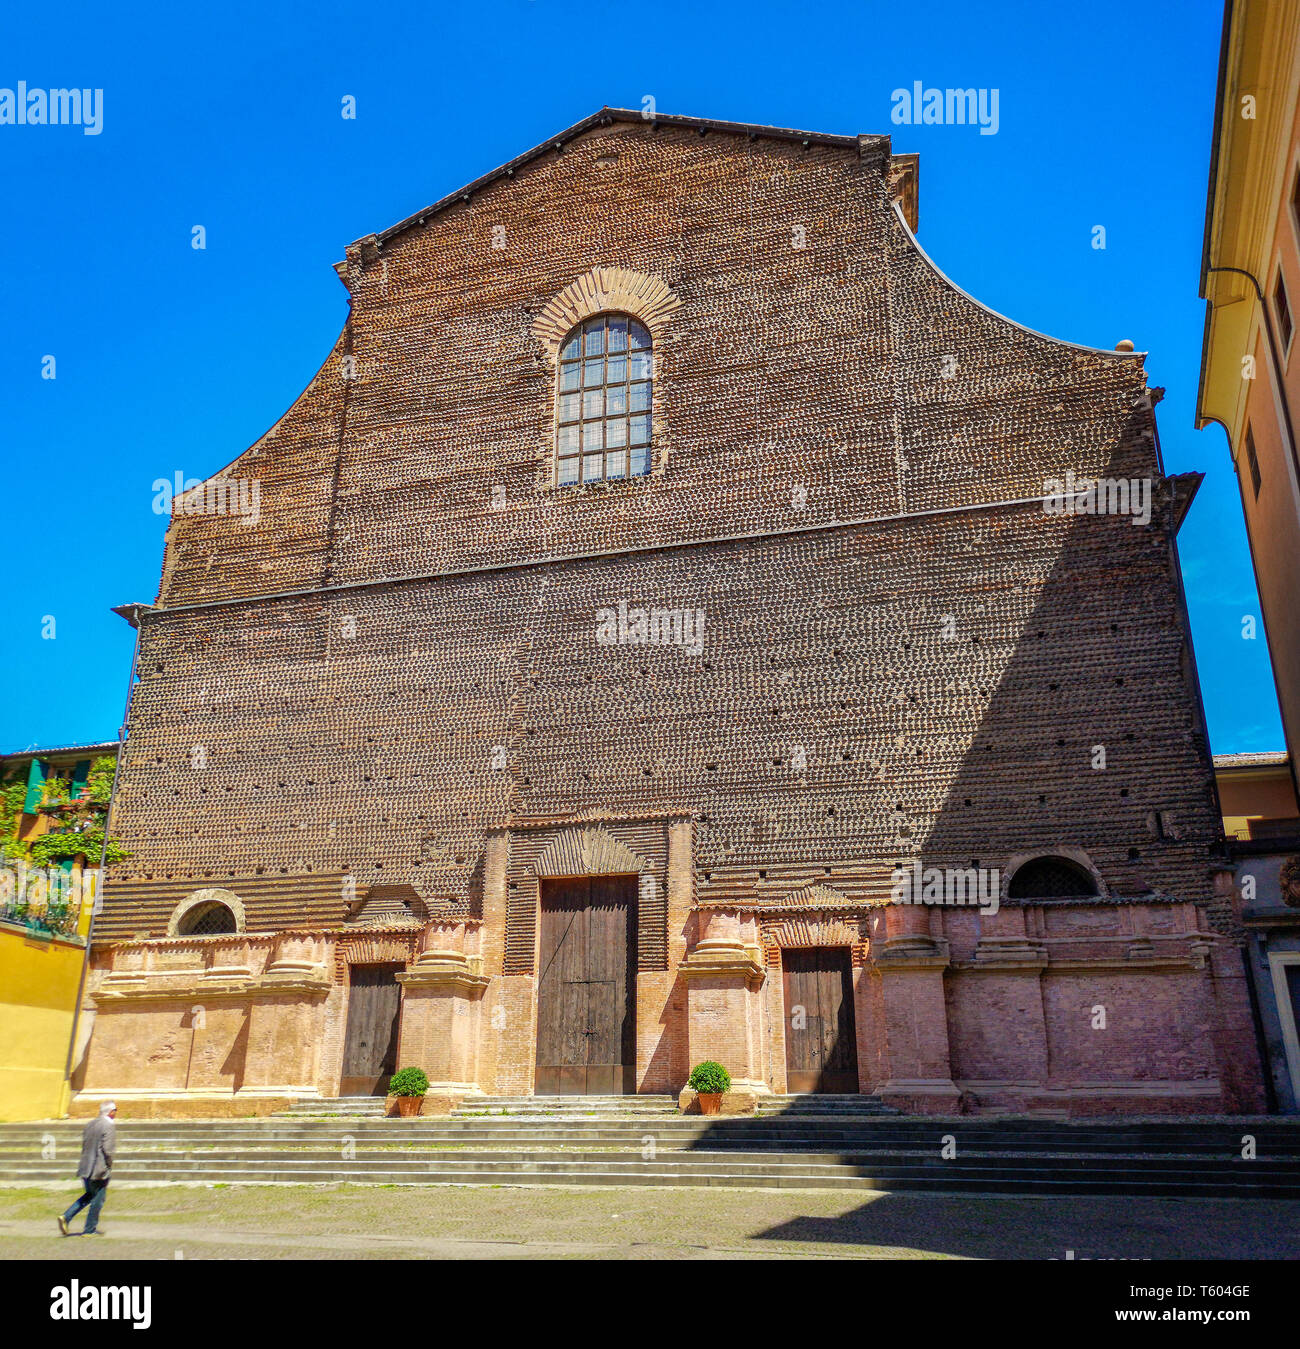 the former Santa Lucia church in Bologna - Emilia Romagna - Italy Stock Photo